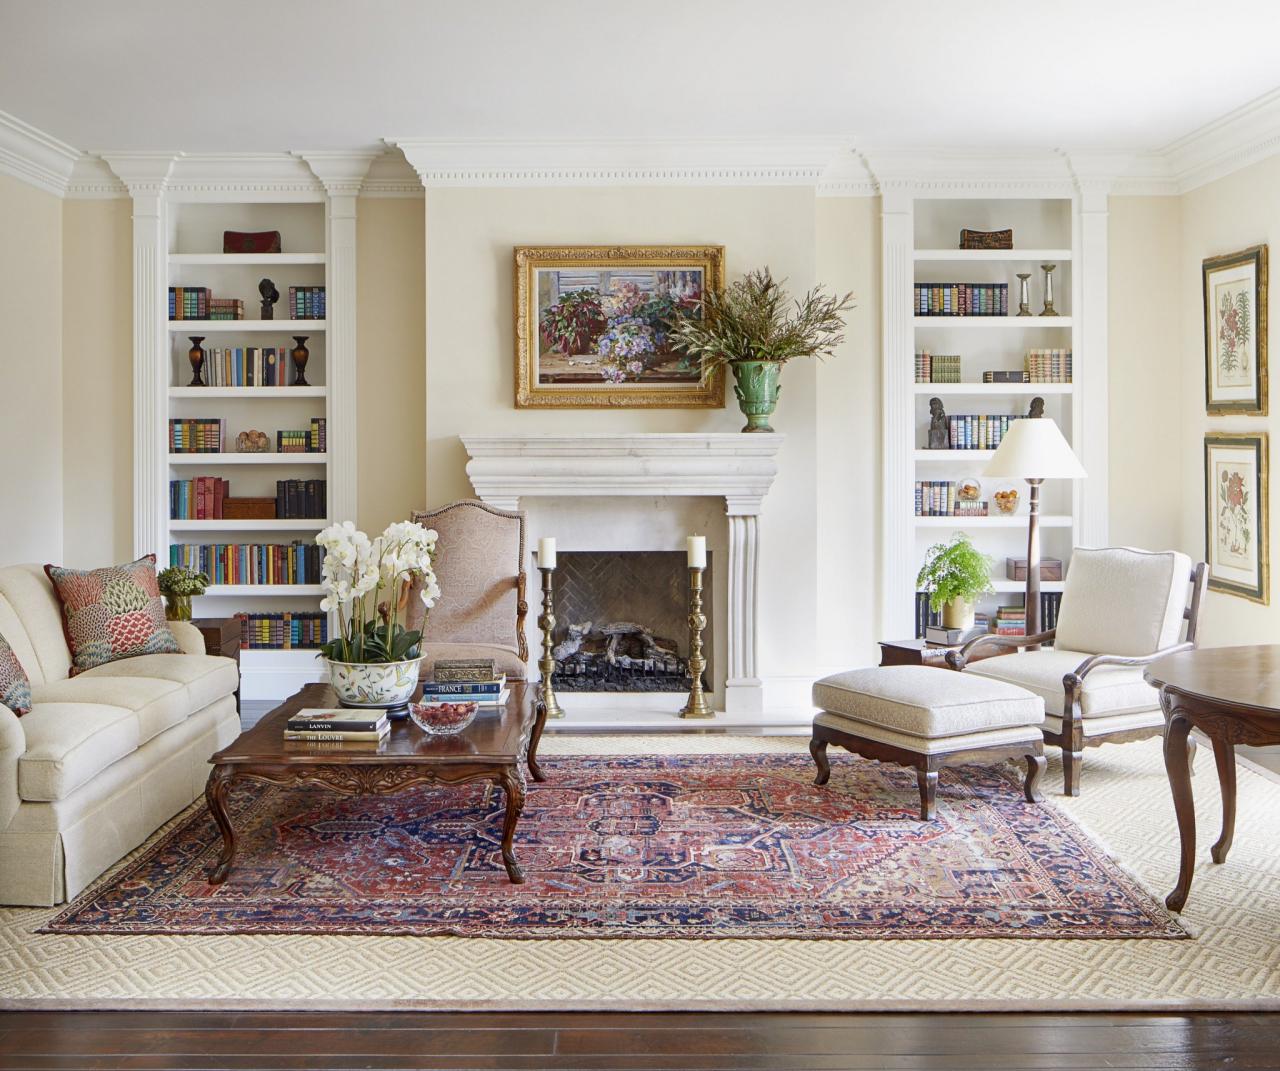 Interior classic style apartment neoclassical behance livingroom living room modern luxury decor vladimir homes creating tips